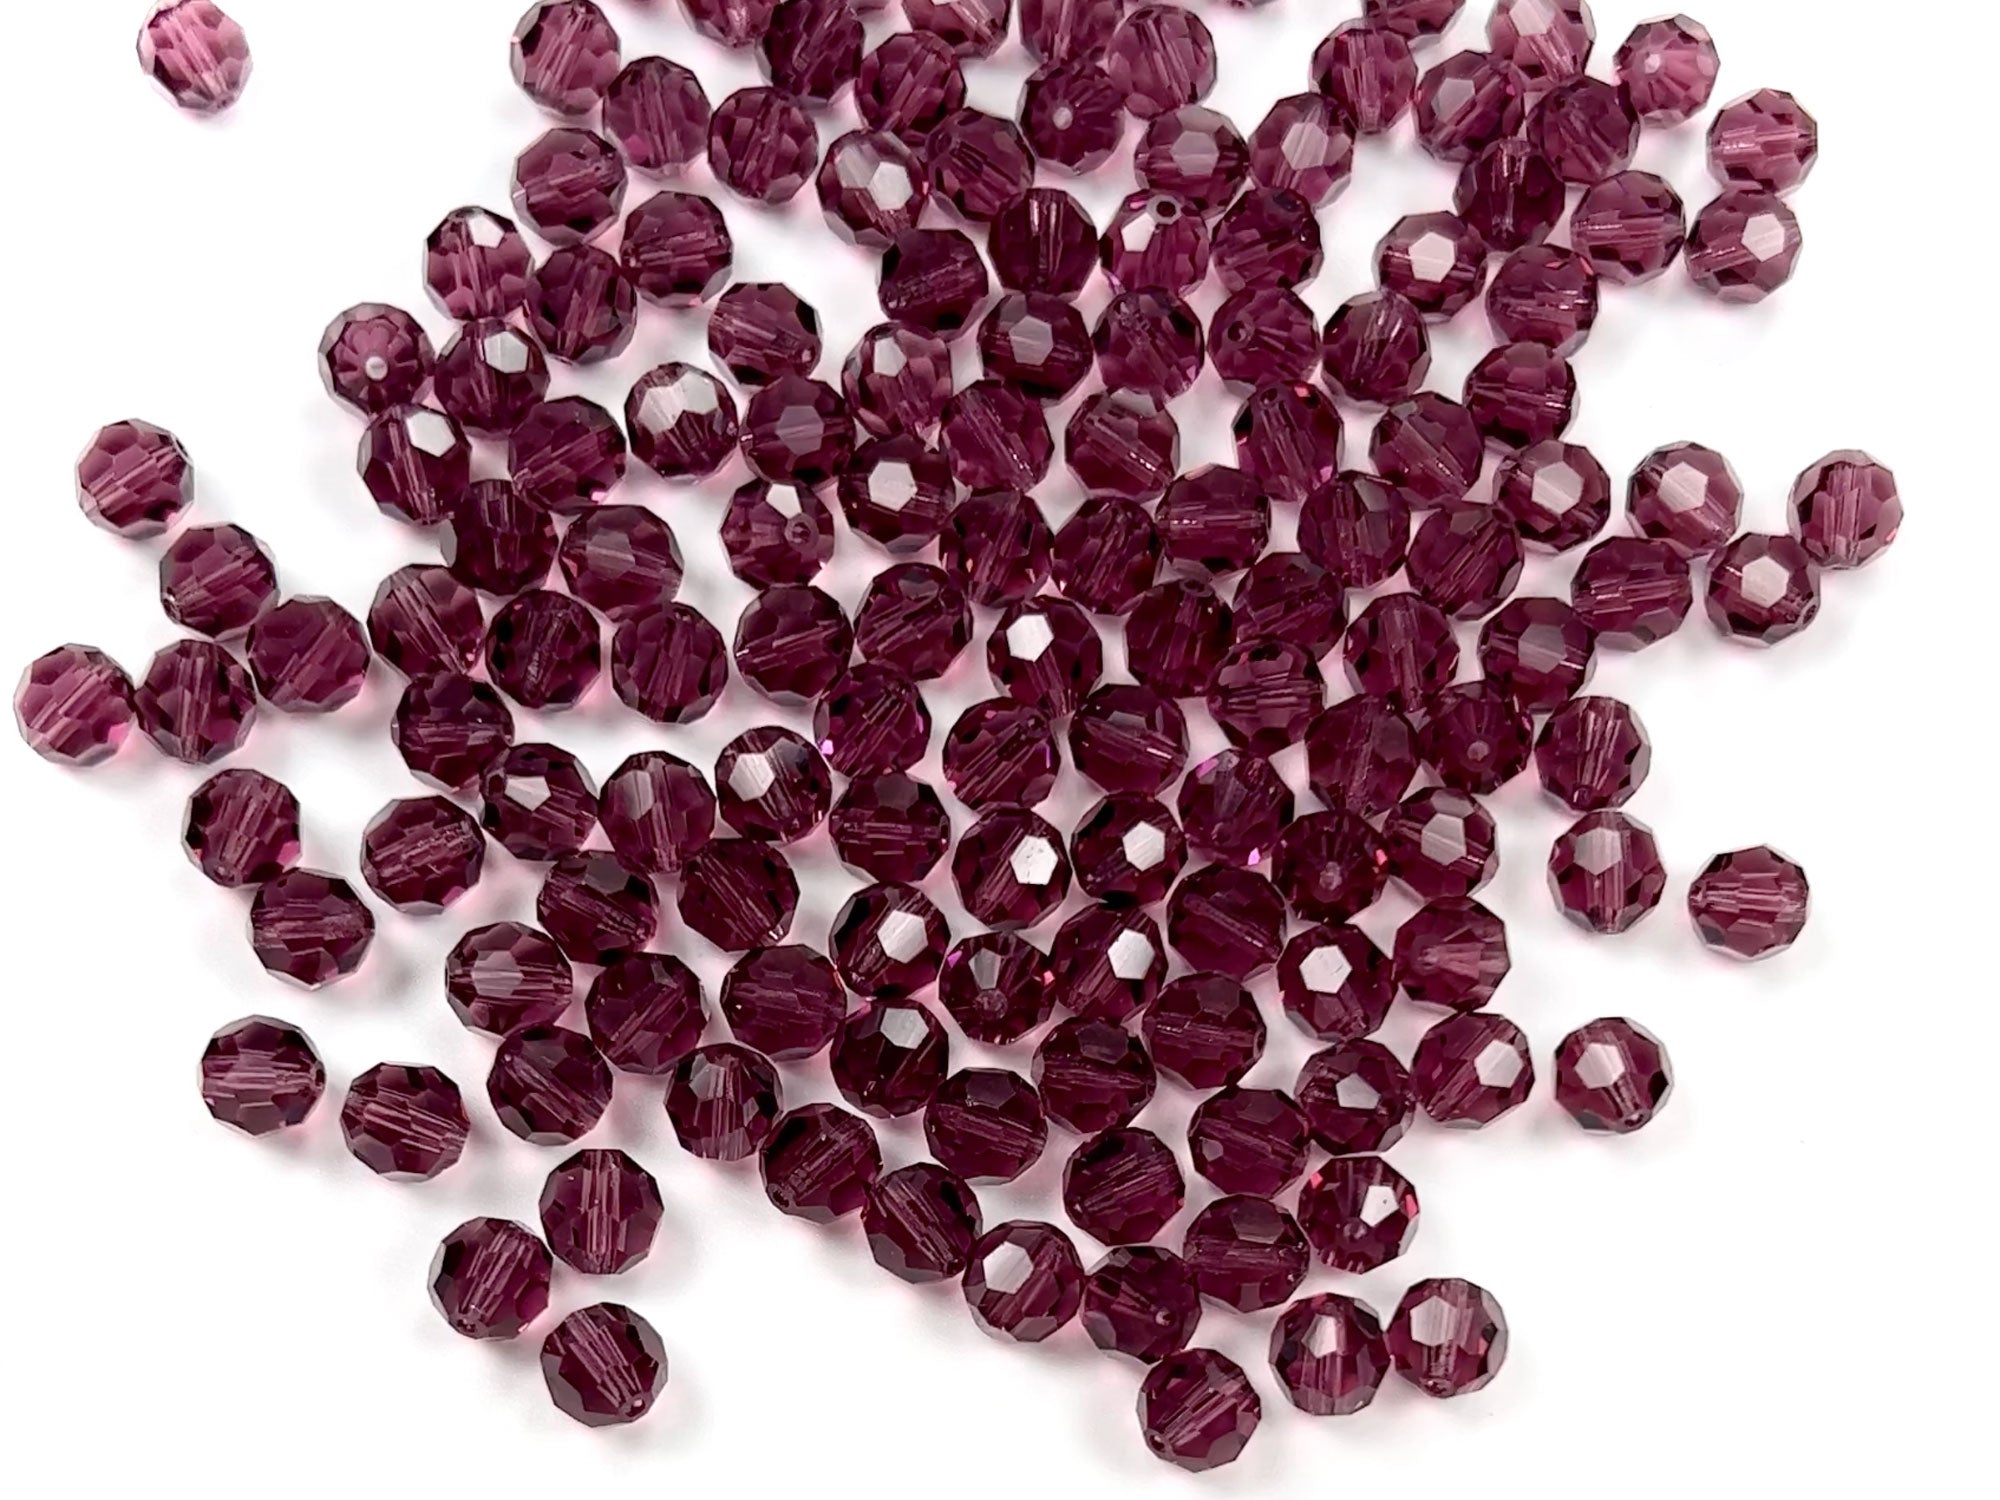 Amethyst Czech Machine Cut Round Crystal Beads purple rosary beads 6mm 7mm 8mm 9mm